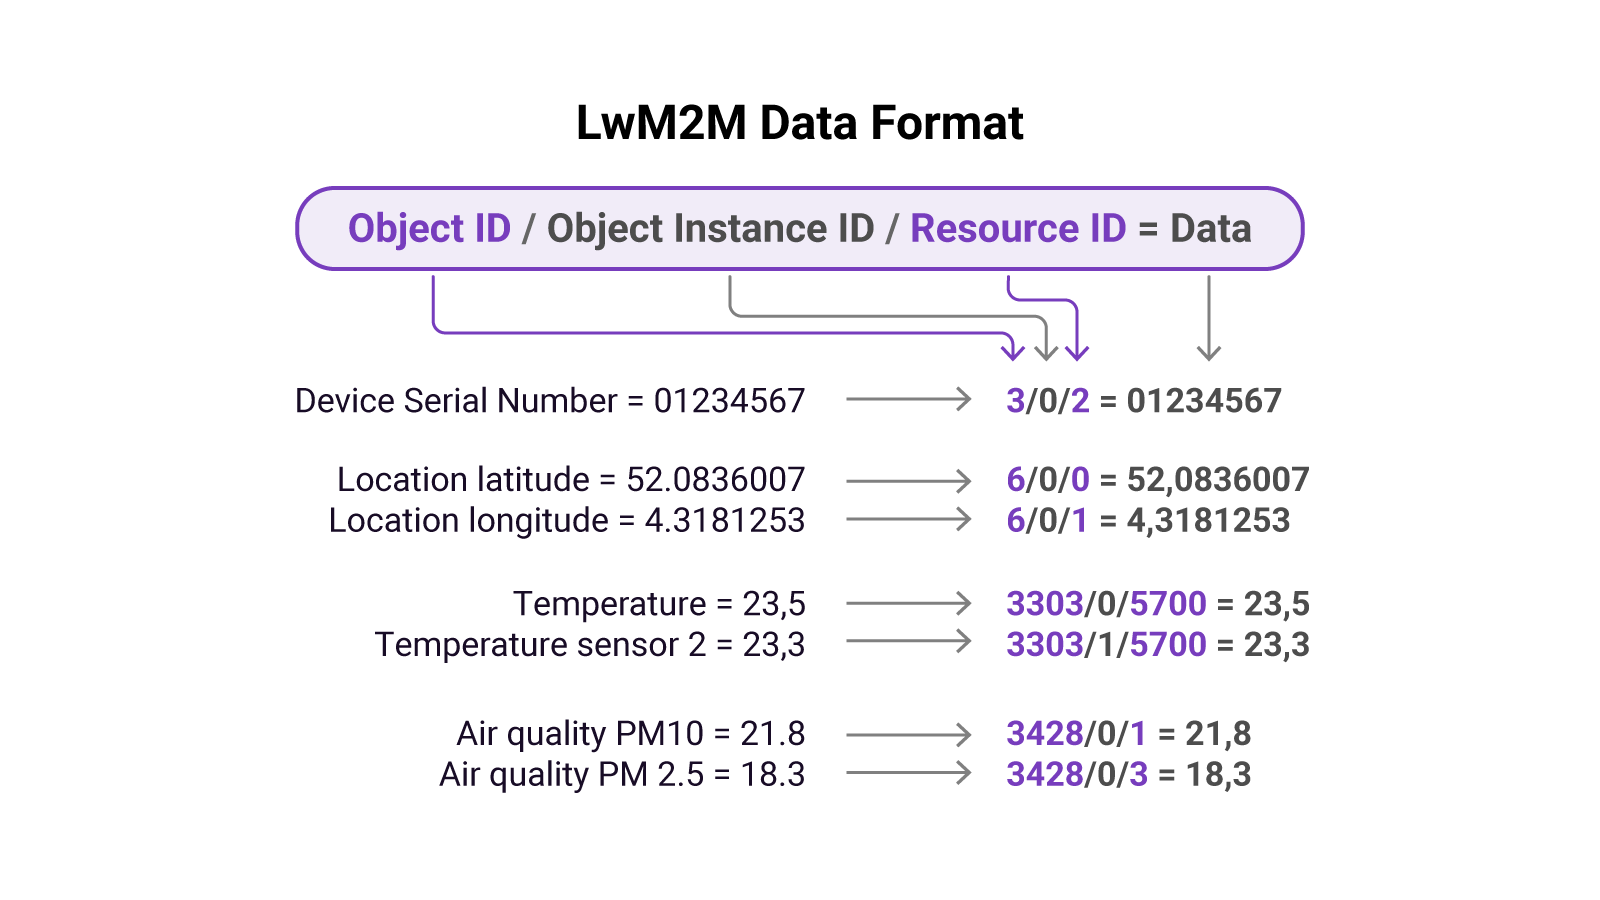 LwM2M data format